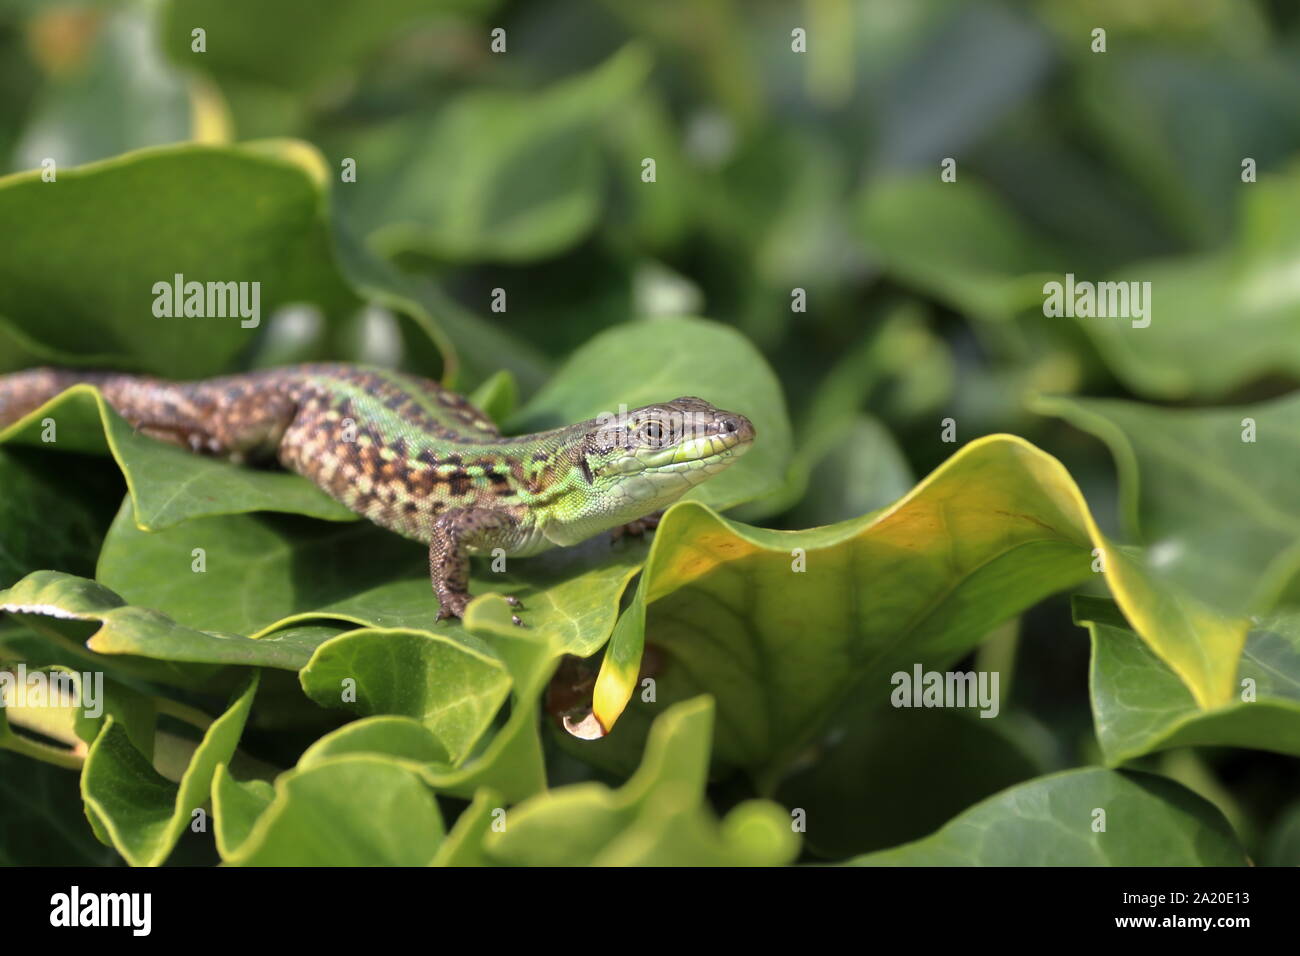 green- brown lizard warm oneself on sun Stock Photo